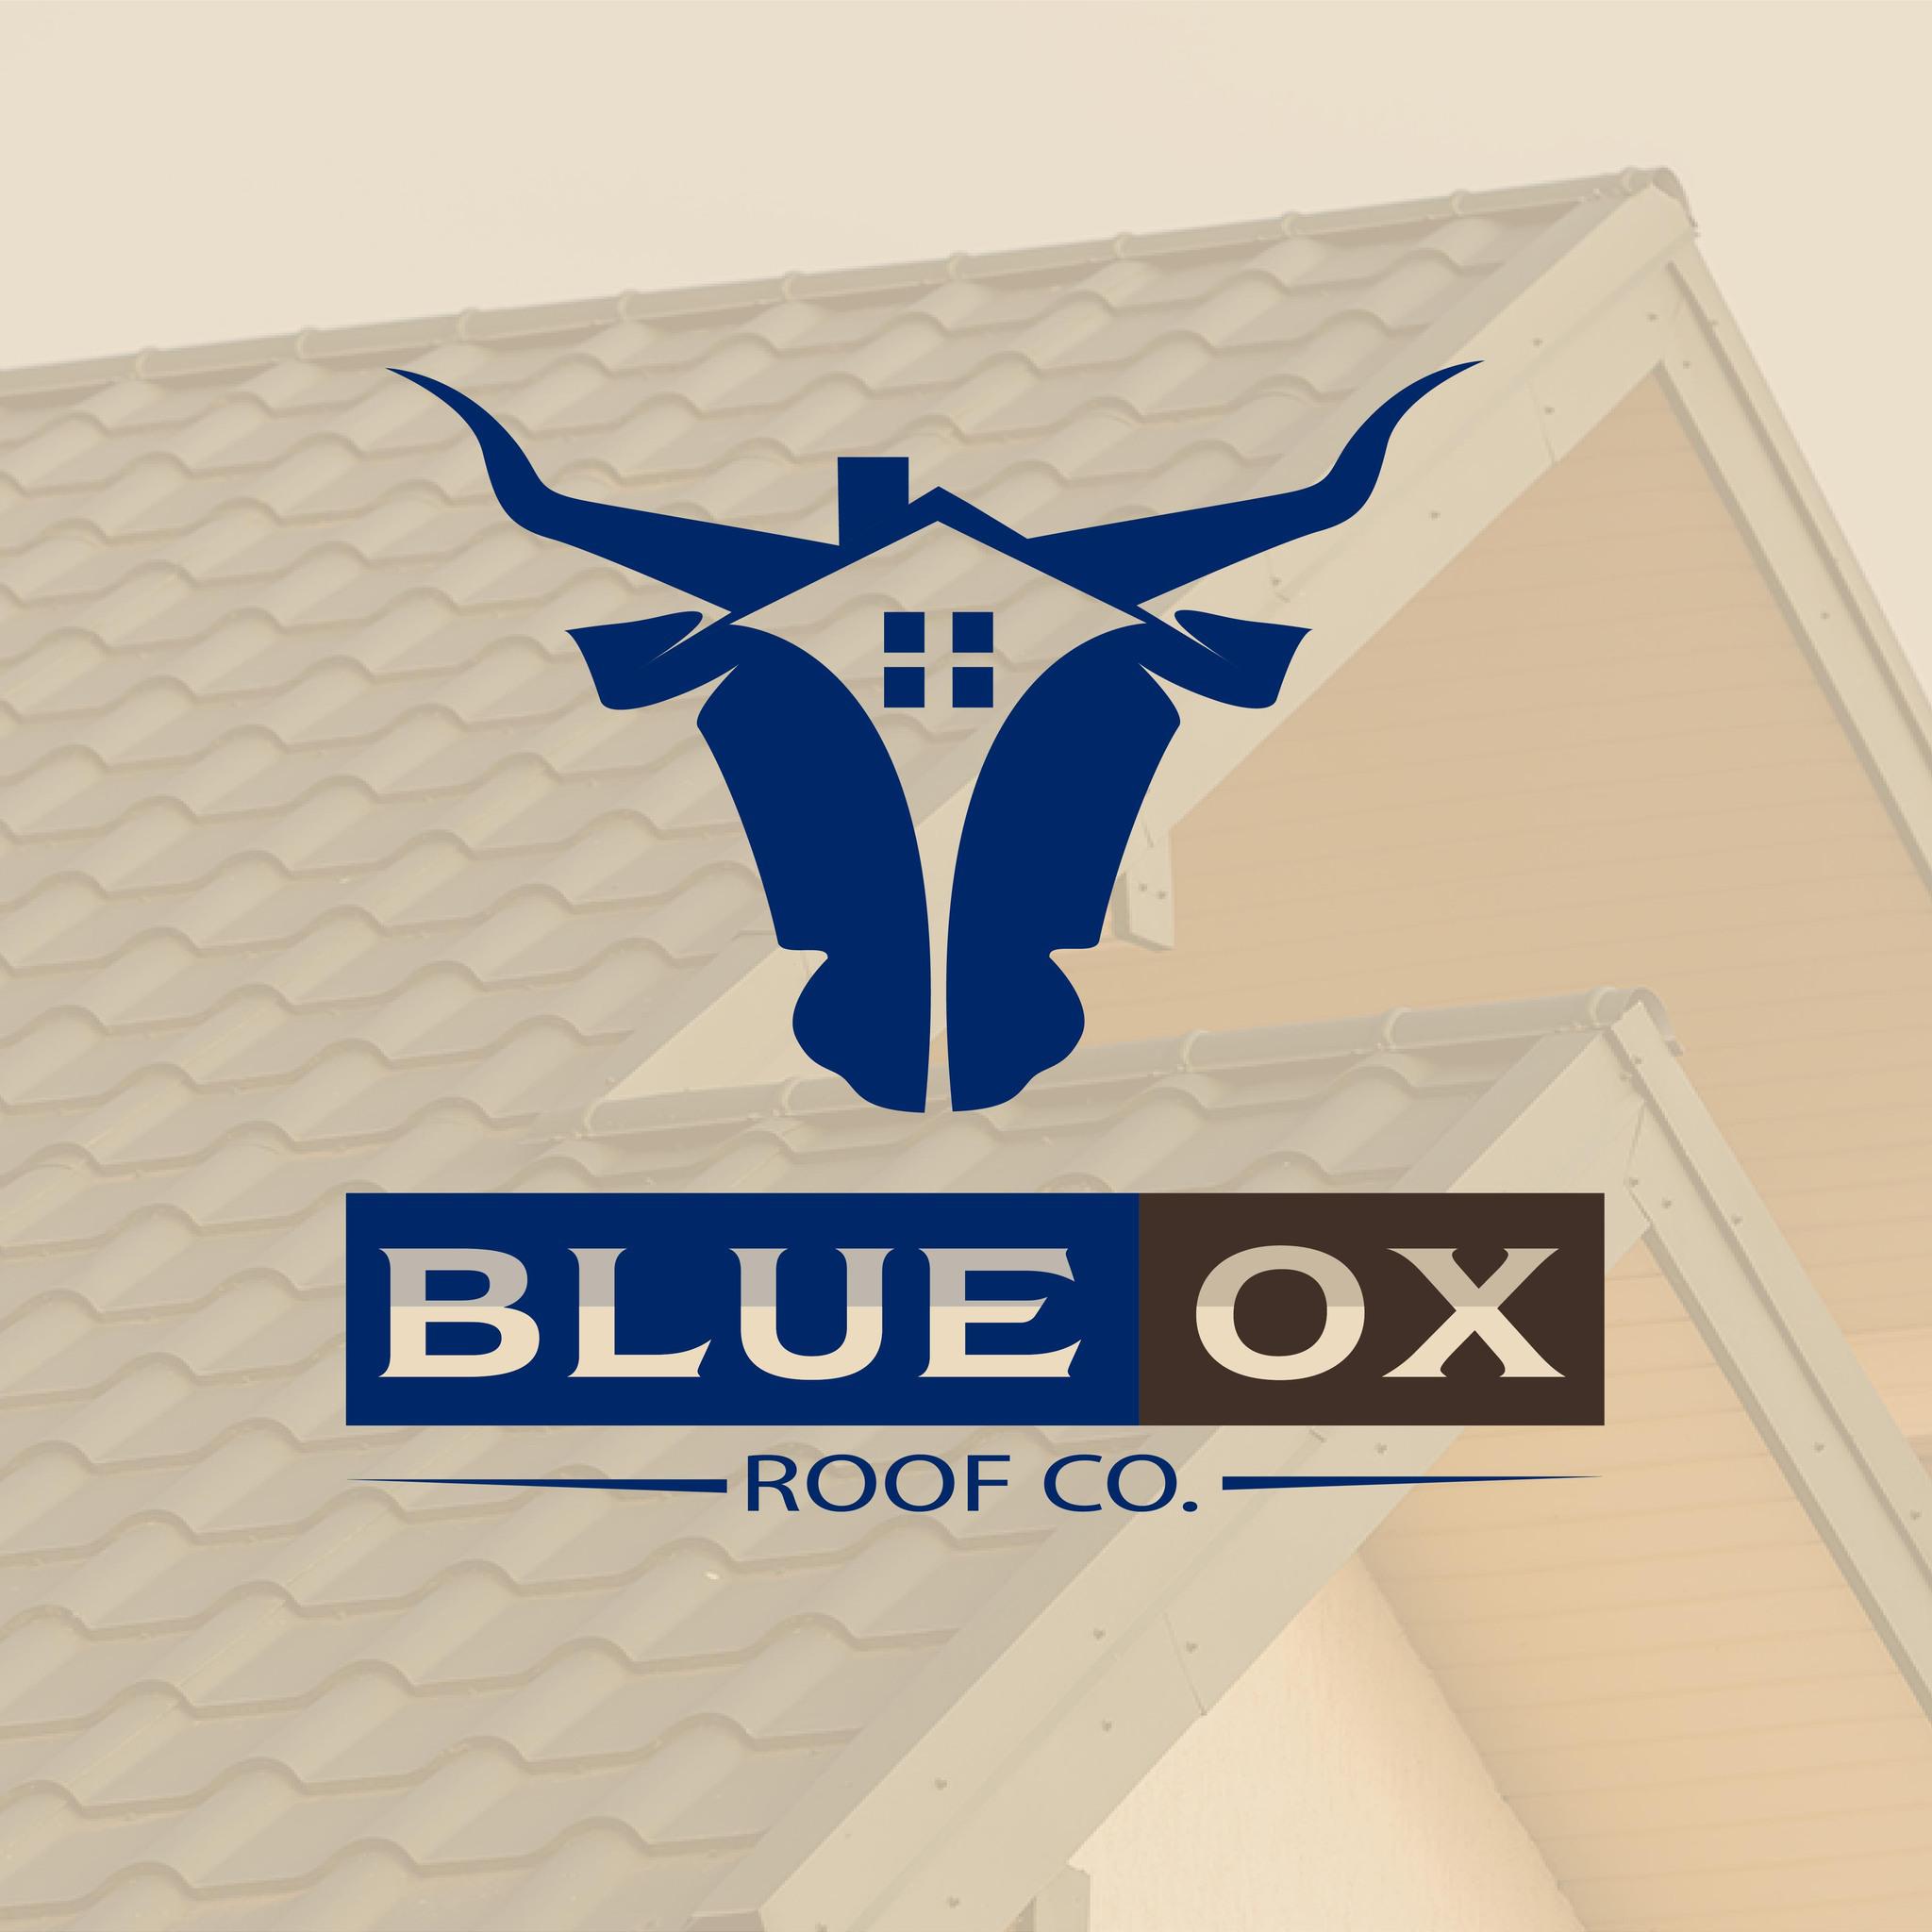 Blue Ox Roof Company - Mountain home, AR - (870)849-9133 | ShowMeLocal.com